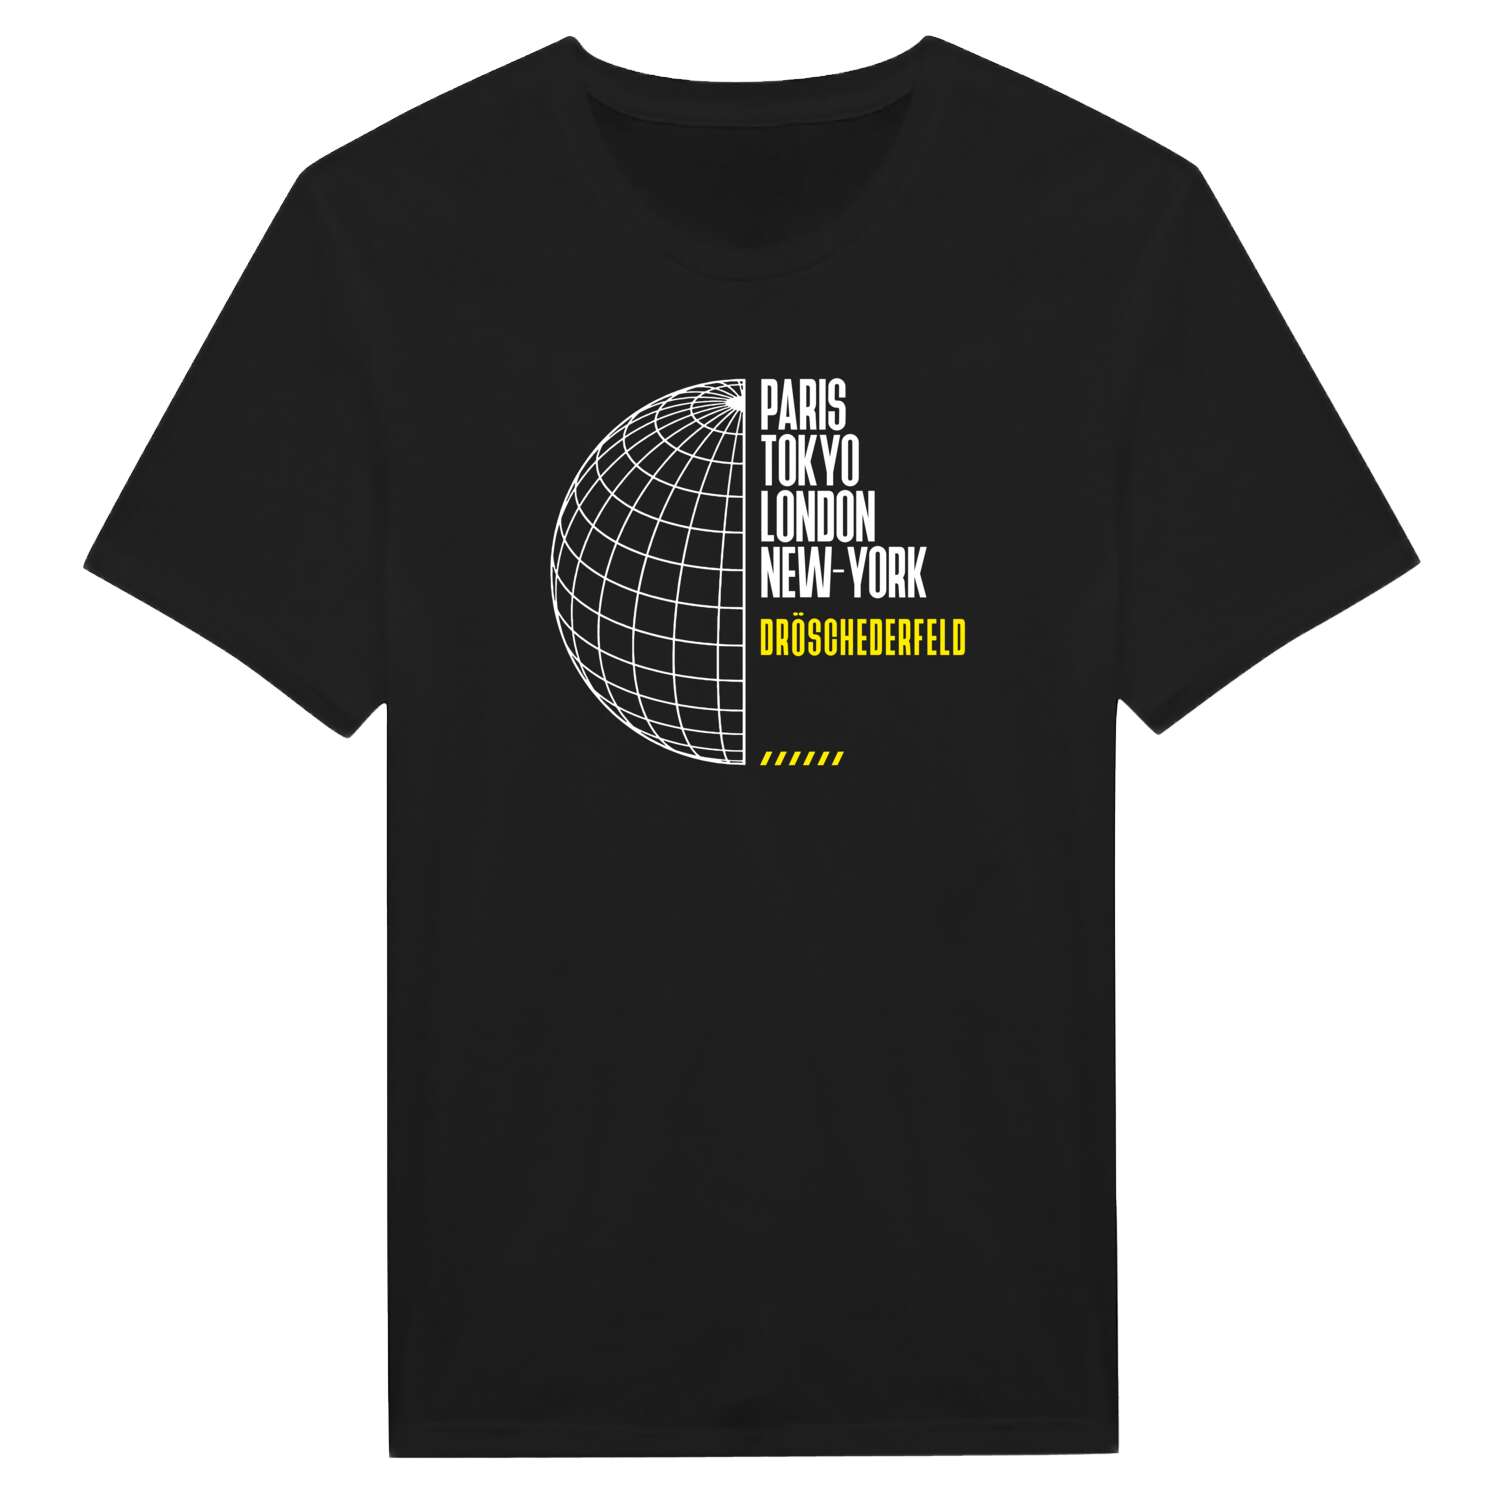 Dröschederfeld T-Shirt »Paris Tokyo London«